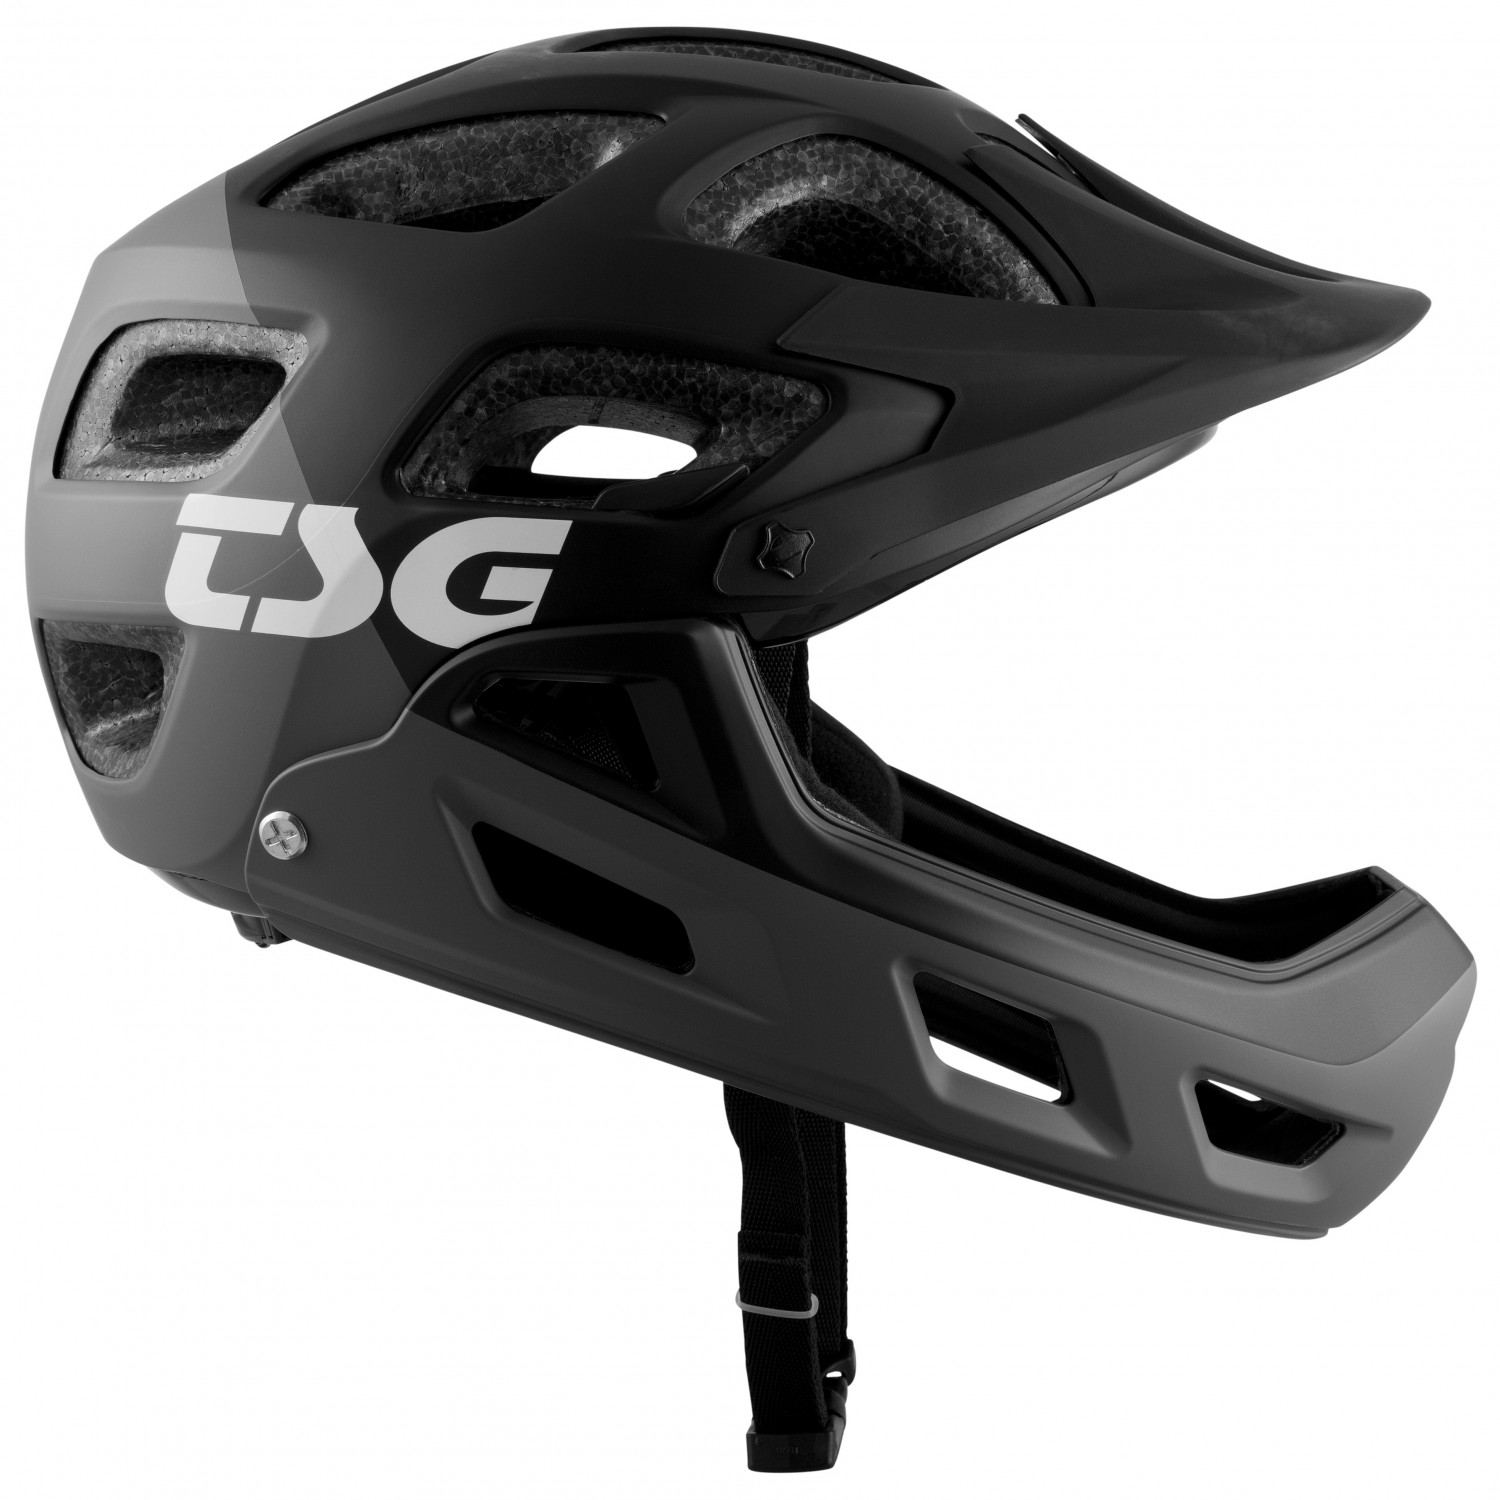 Велосипедный шлем Tsg Seek Fr Graphic Design, цвет Flow Grey/Black